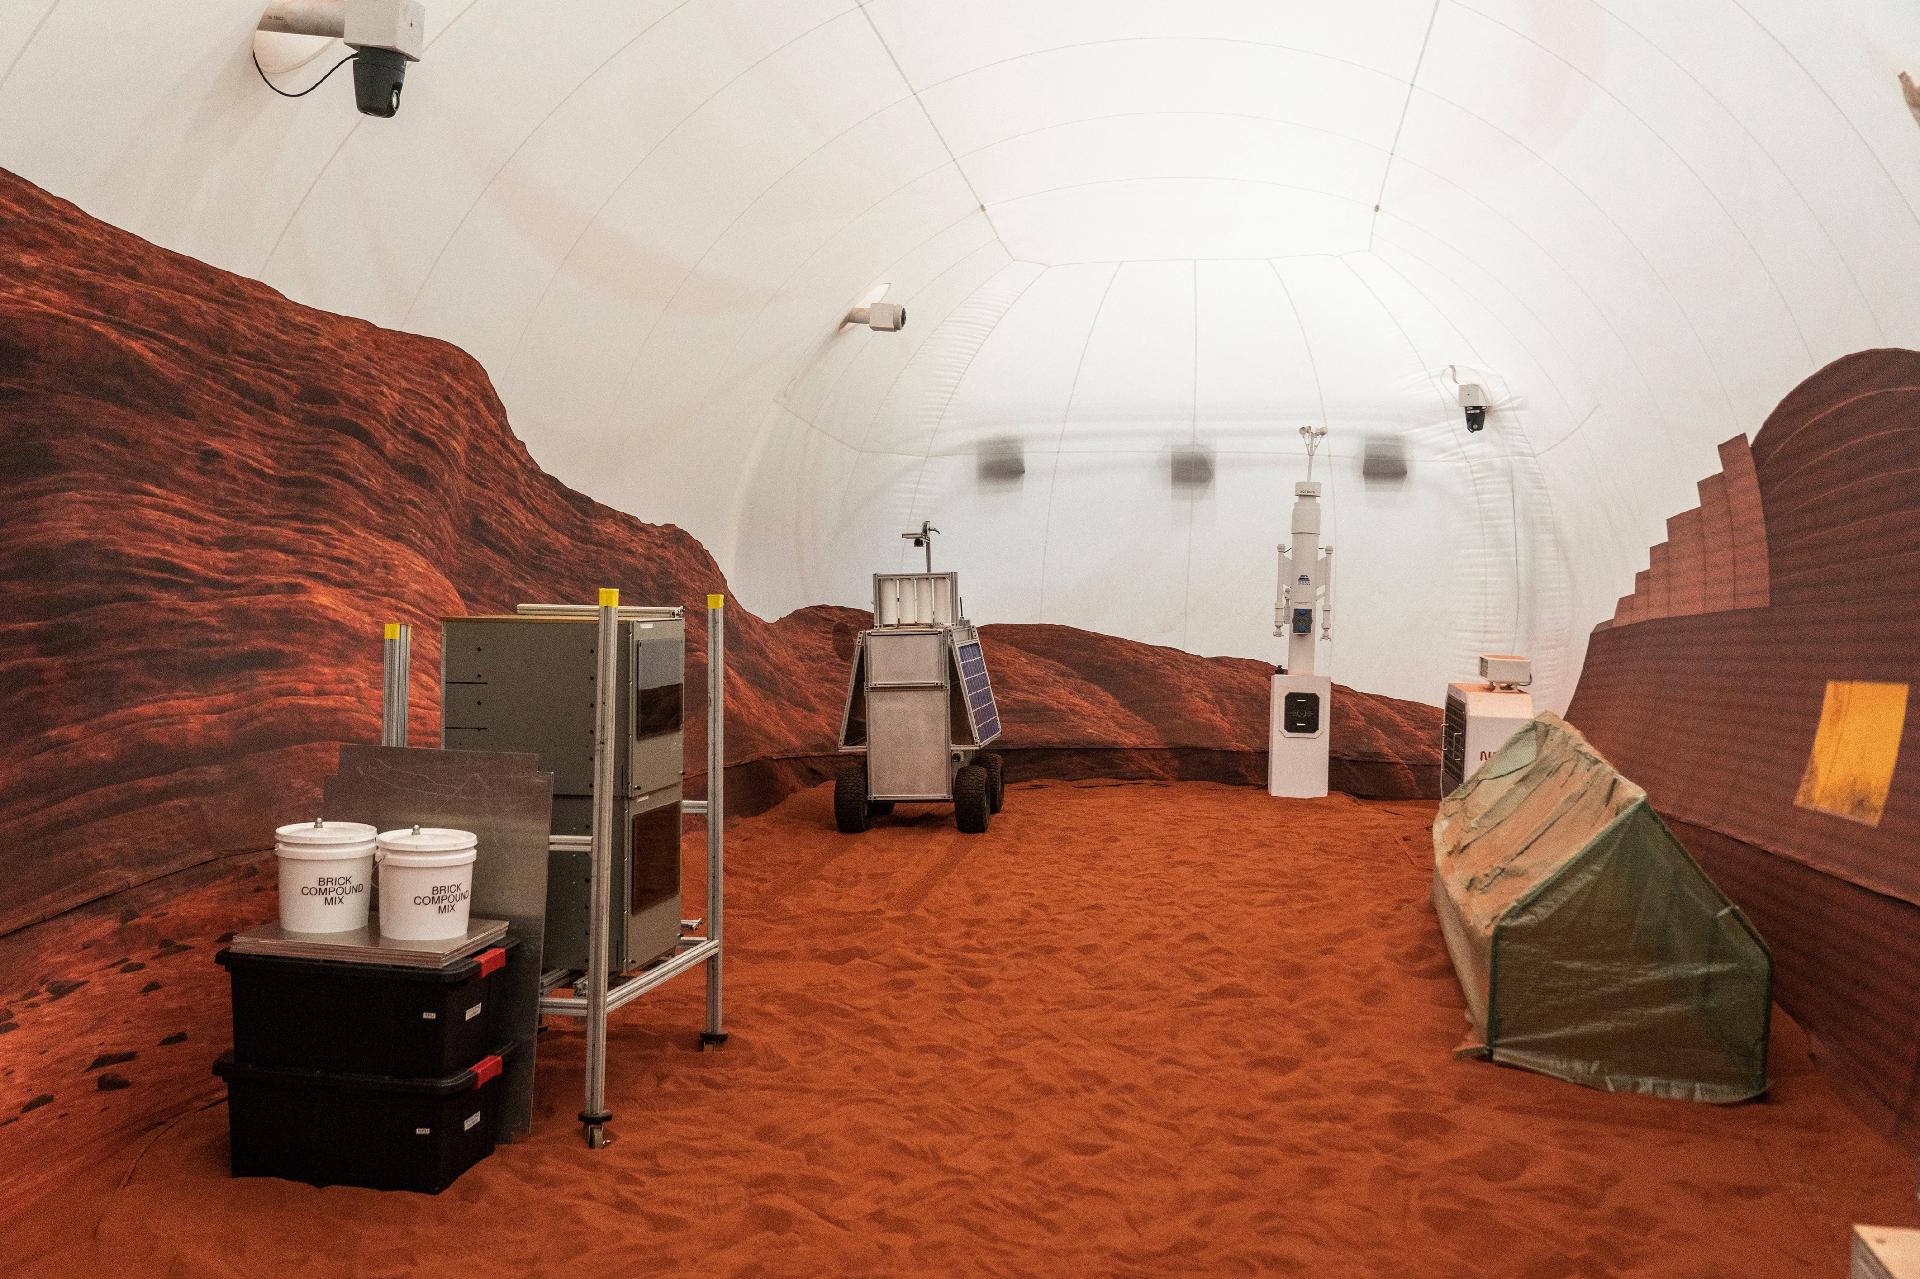 Mars Dune Alpha - Go Nakamura/Reuters